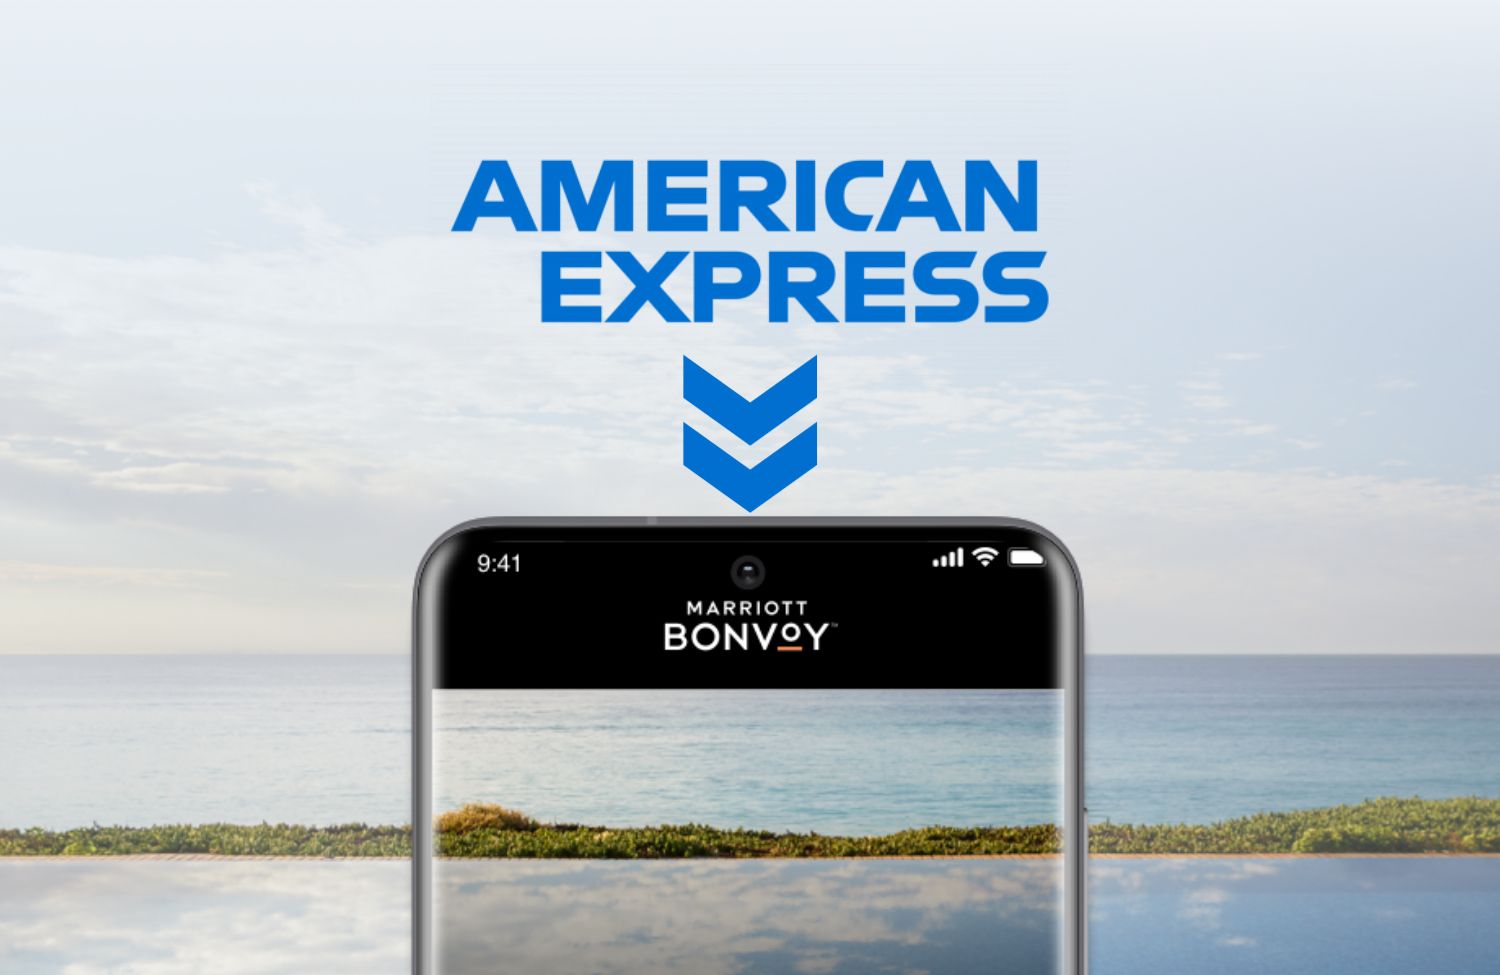 American Express 20% Transfer Bonus to Marriott Bonvoy